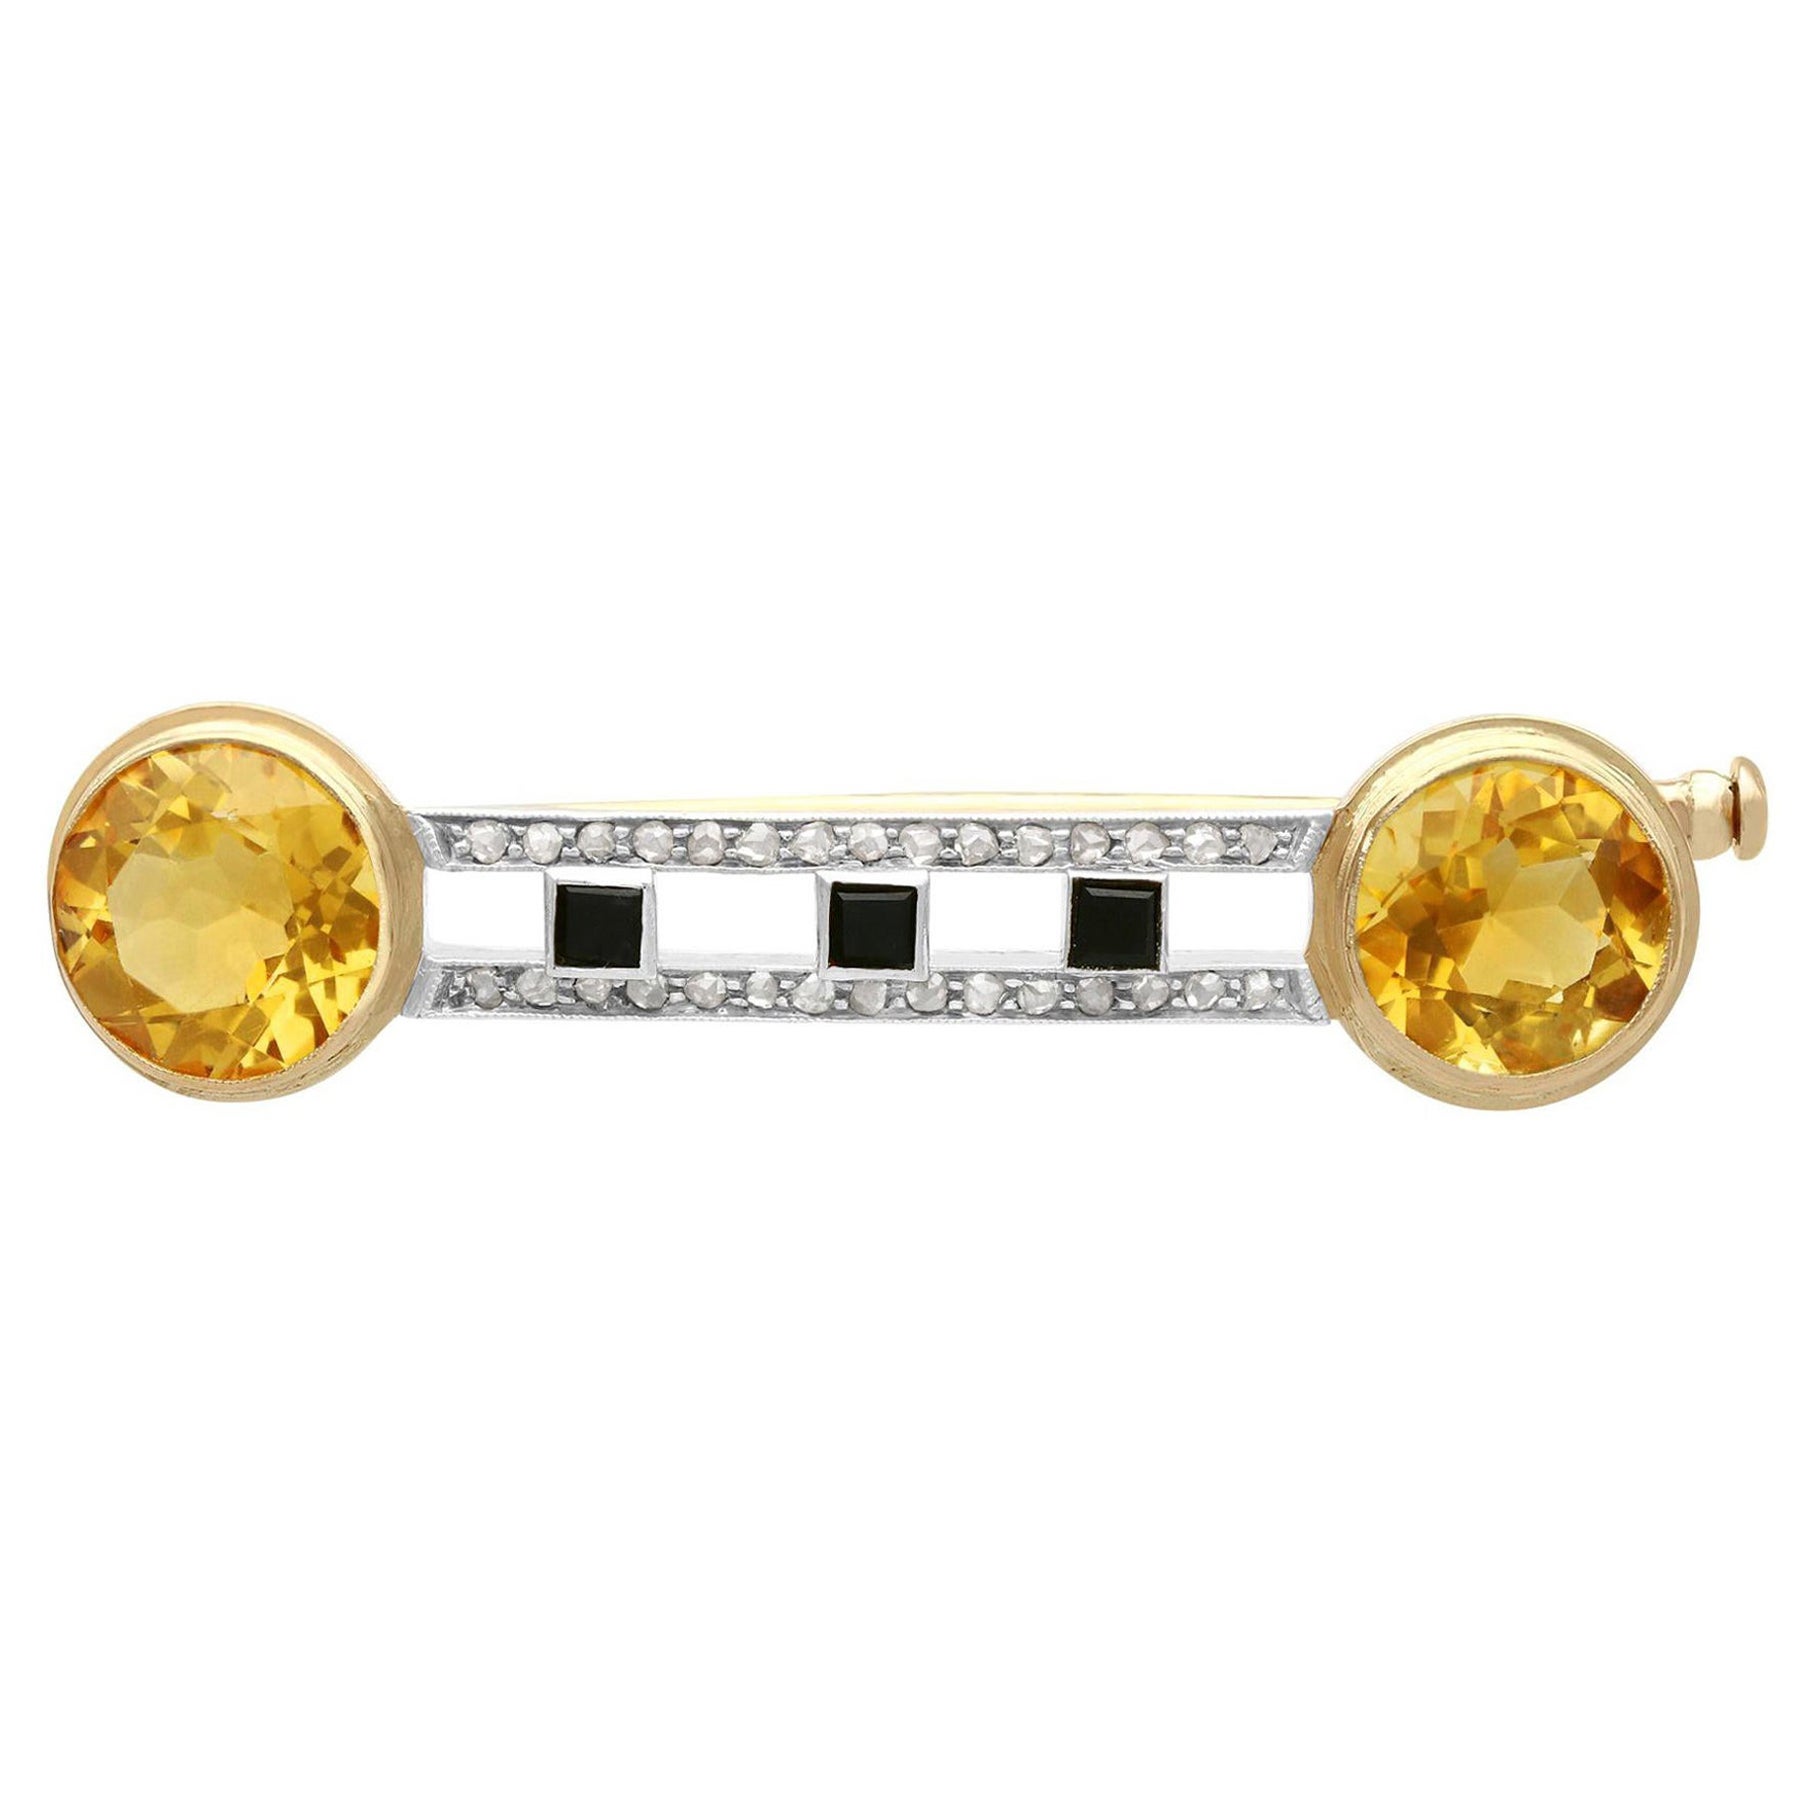 1920s 6.69 Carat Citrine Diamond and Onyx Yellow Gold Brooch